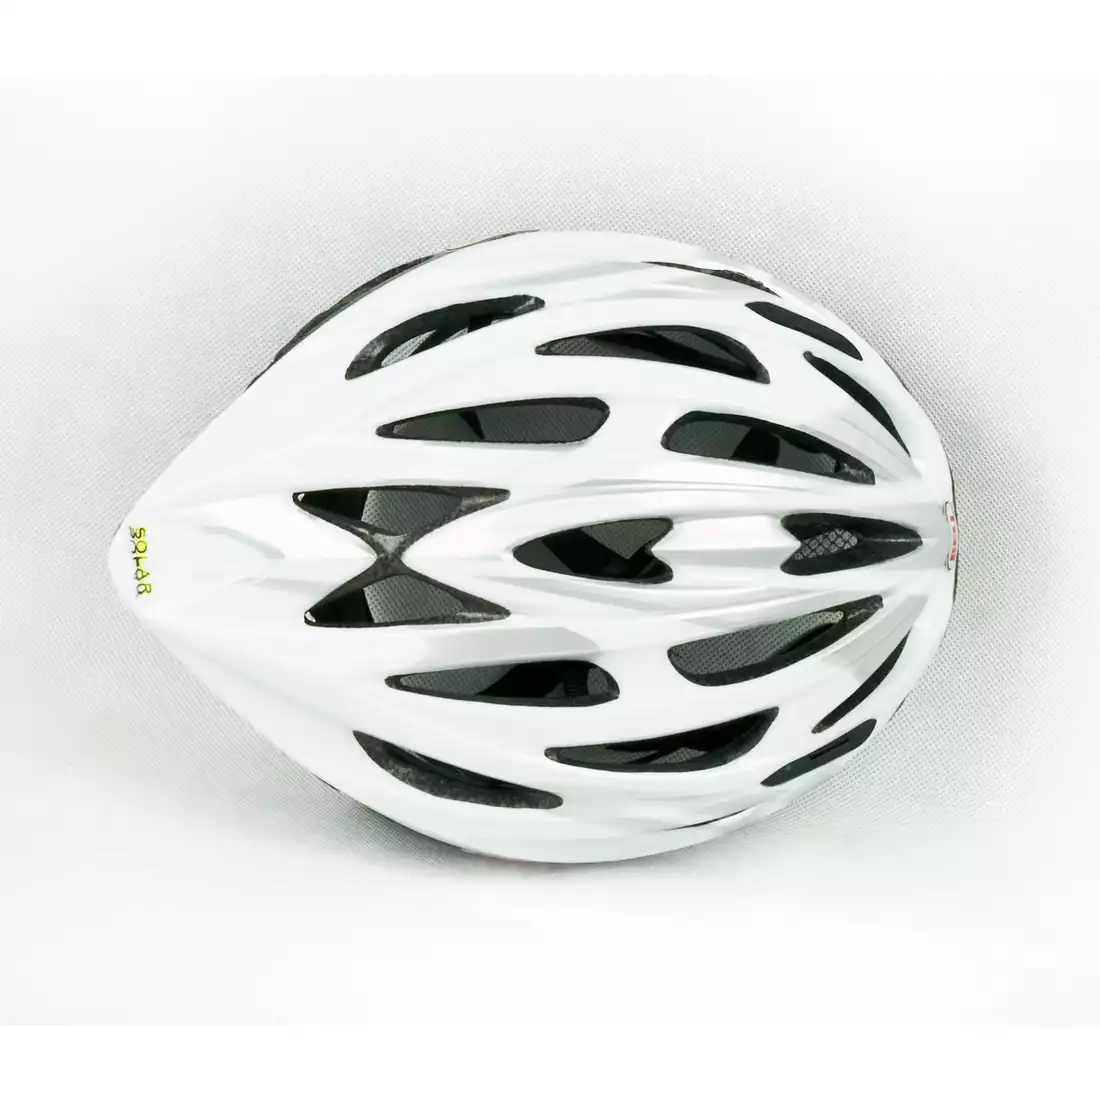 BELL SOLAR - kask rowerowy, biało-srebrny blast